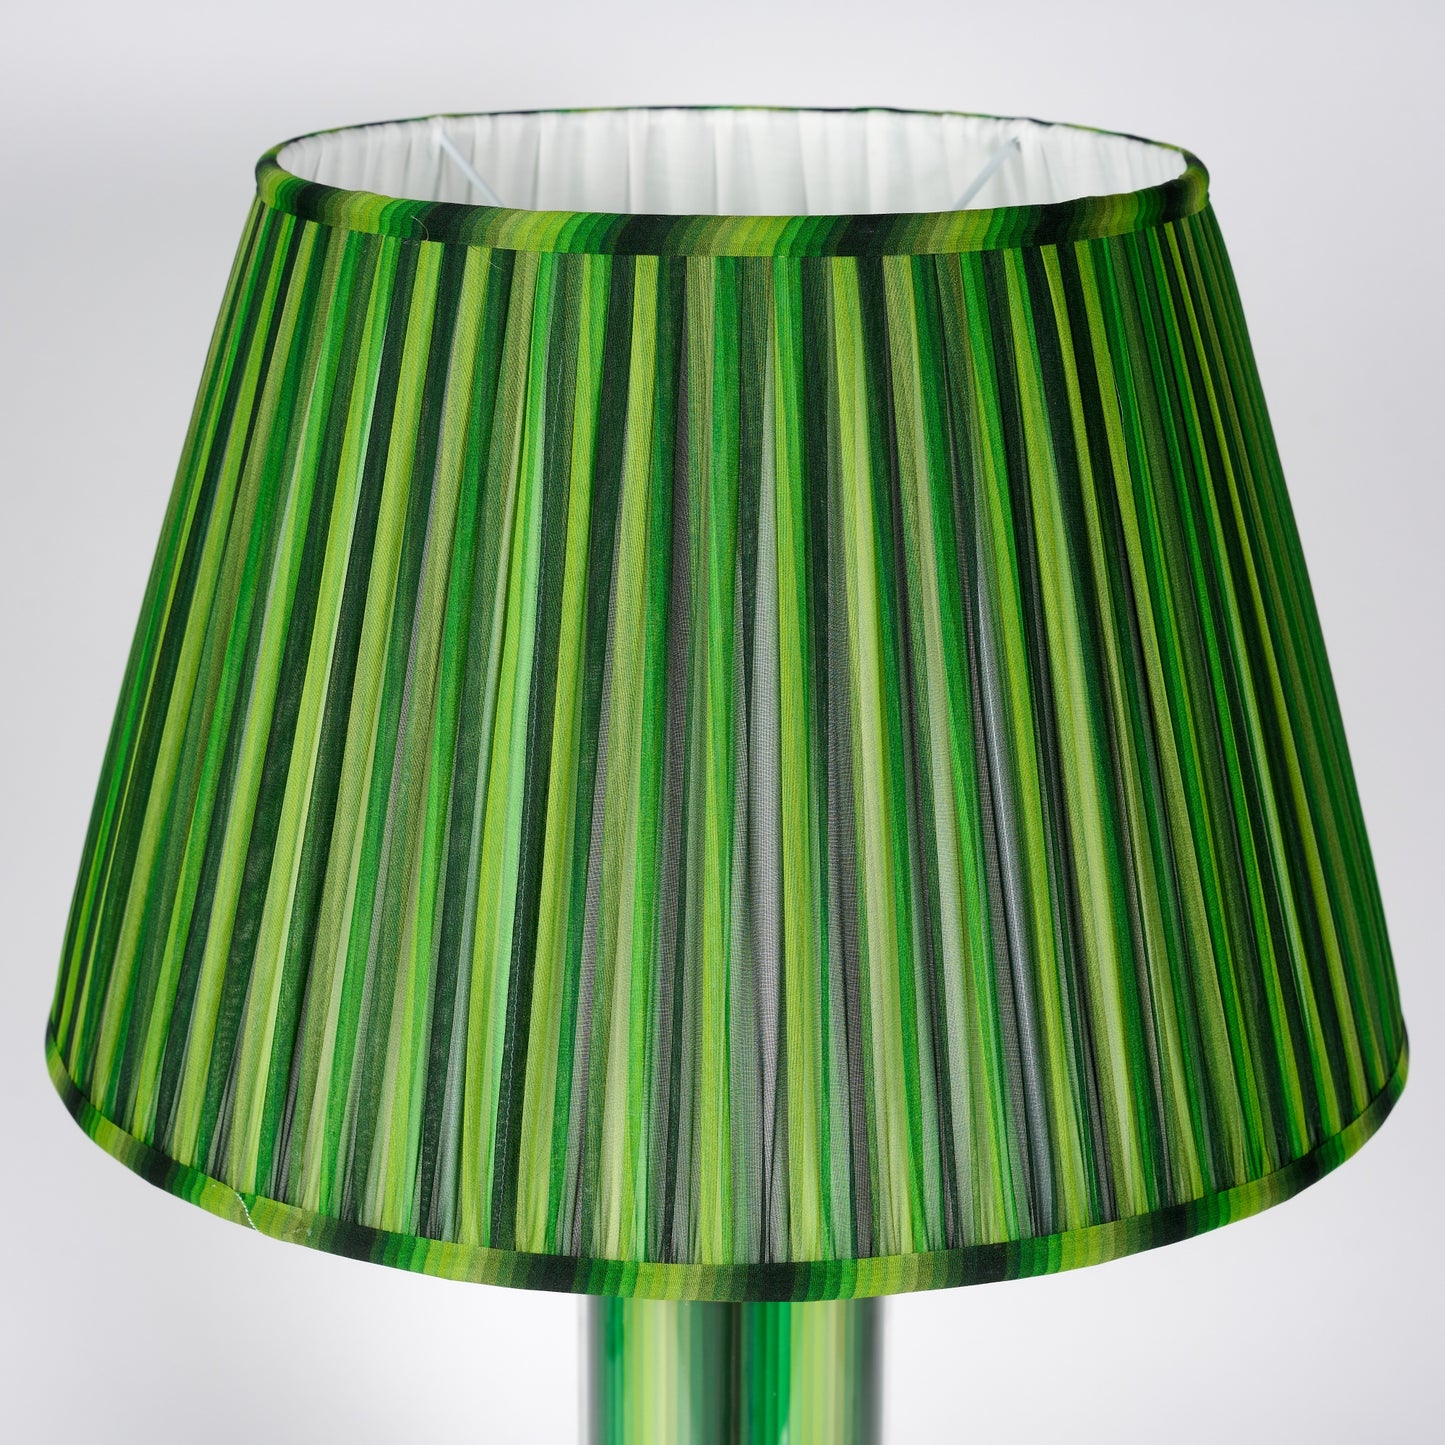 Undulating Stripes - Green Glass & Brass Lamp